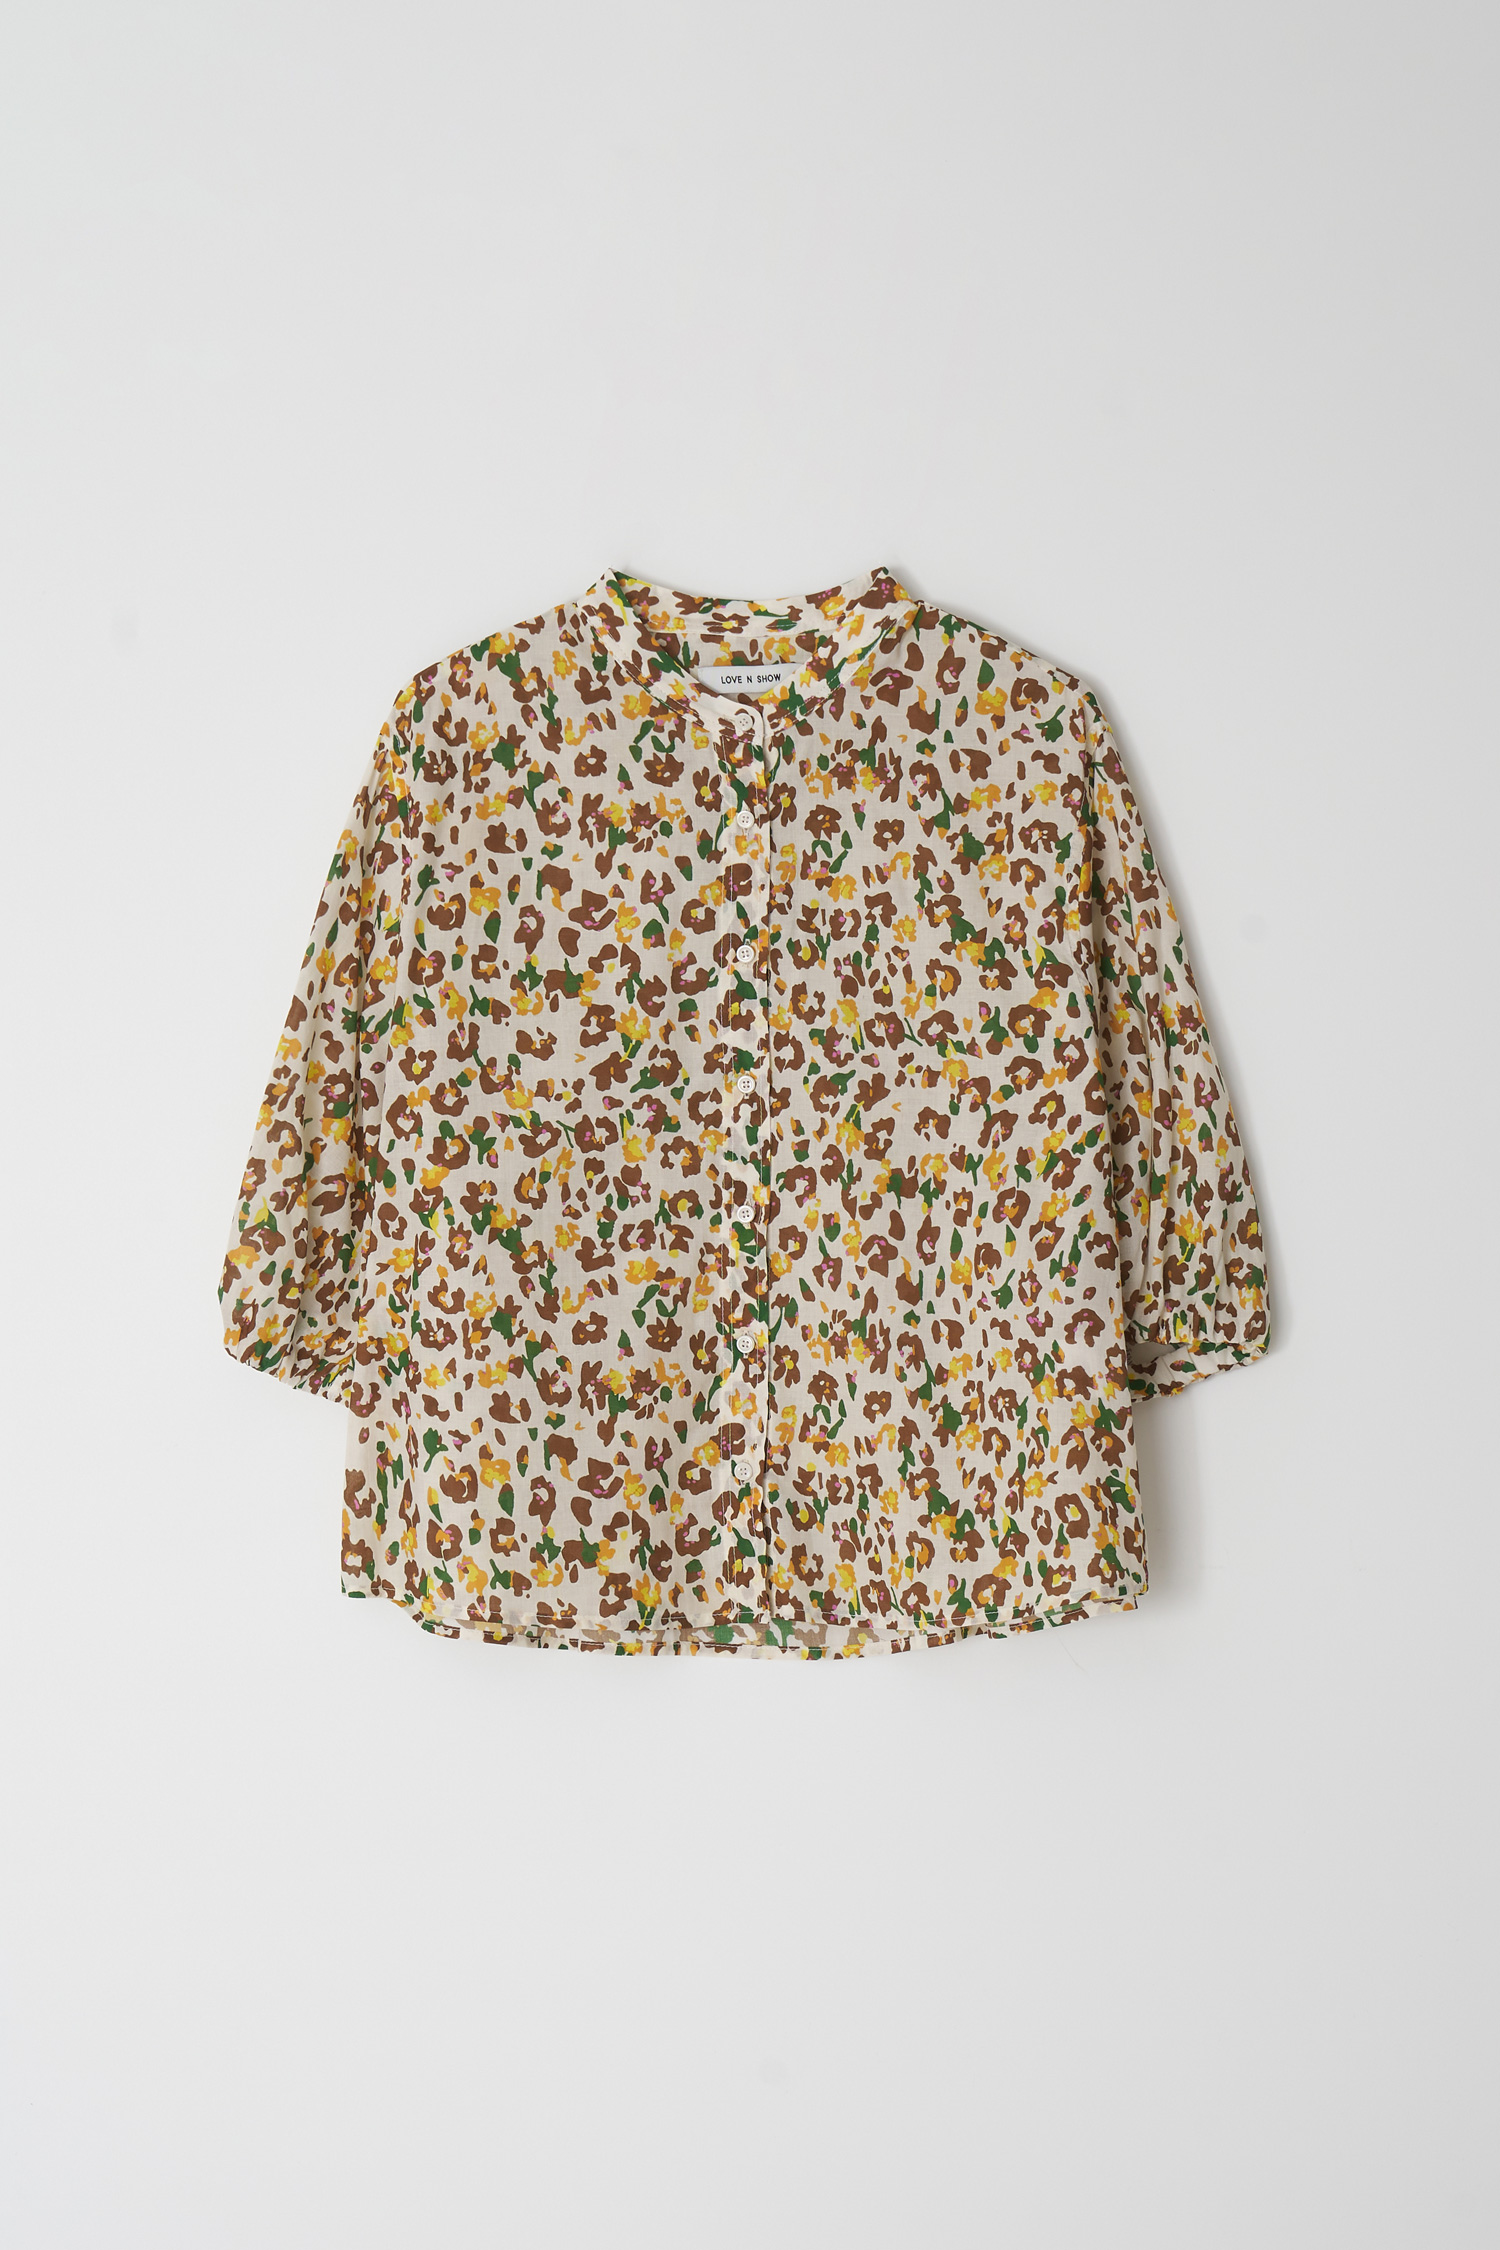 leopard print volume blouse